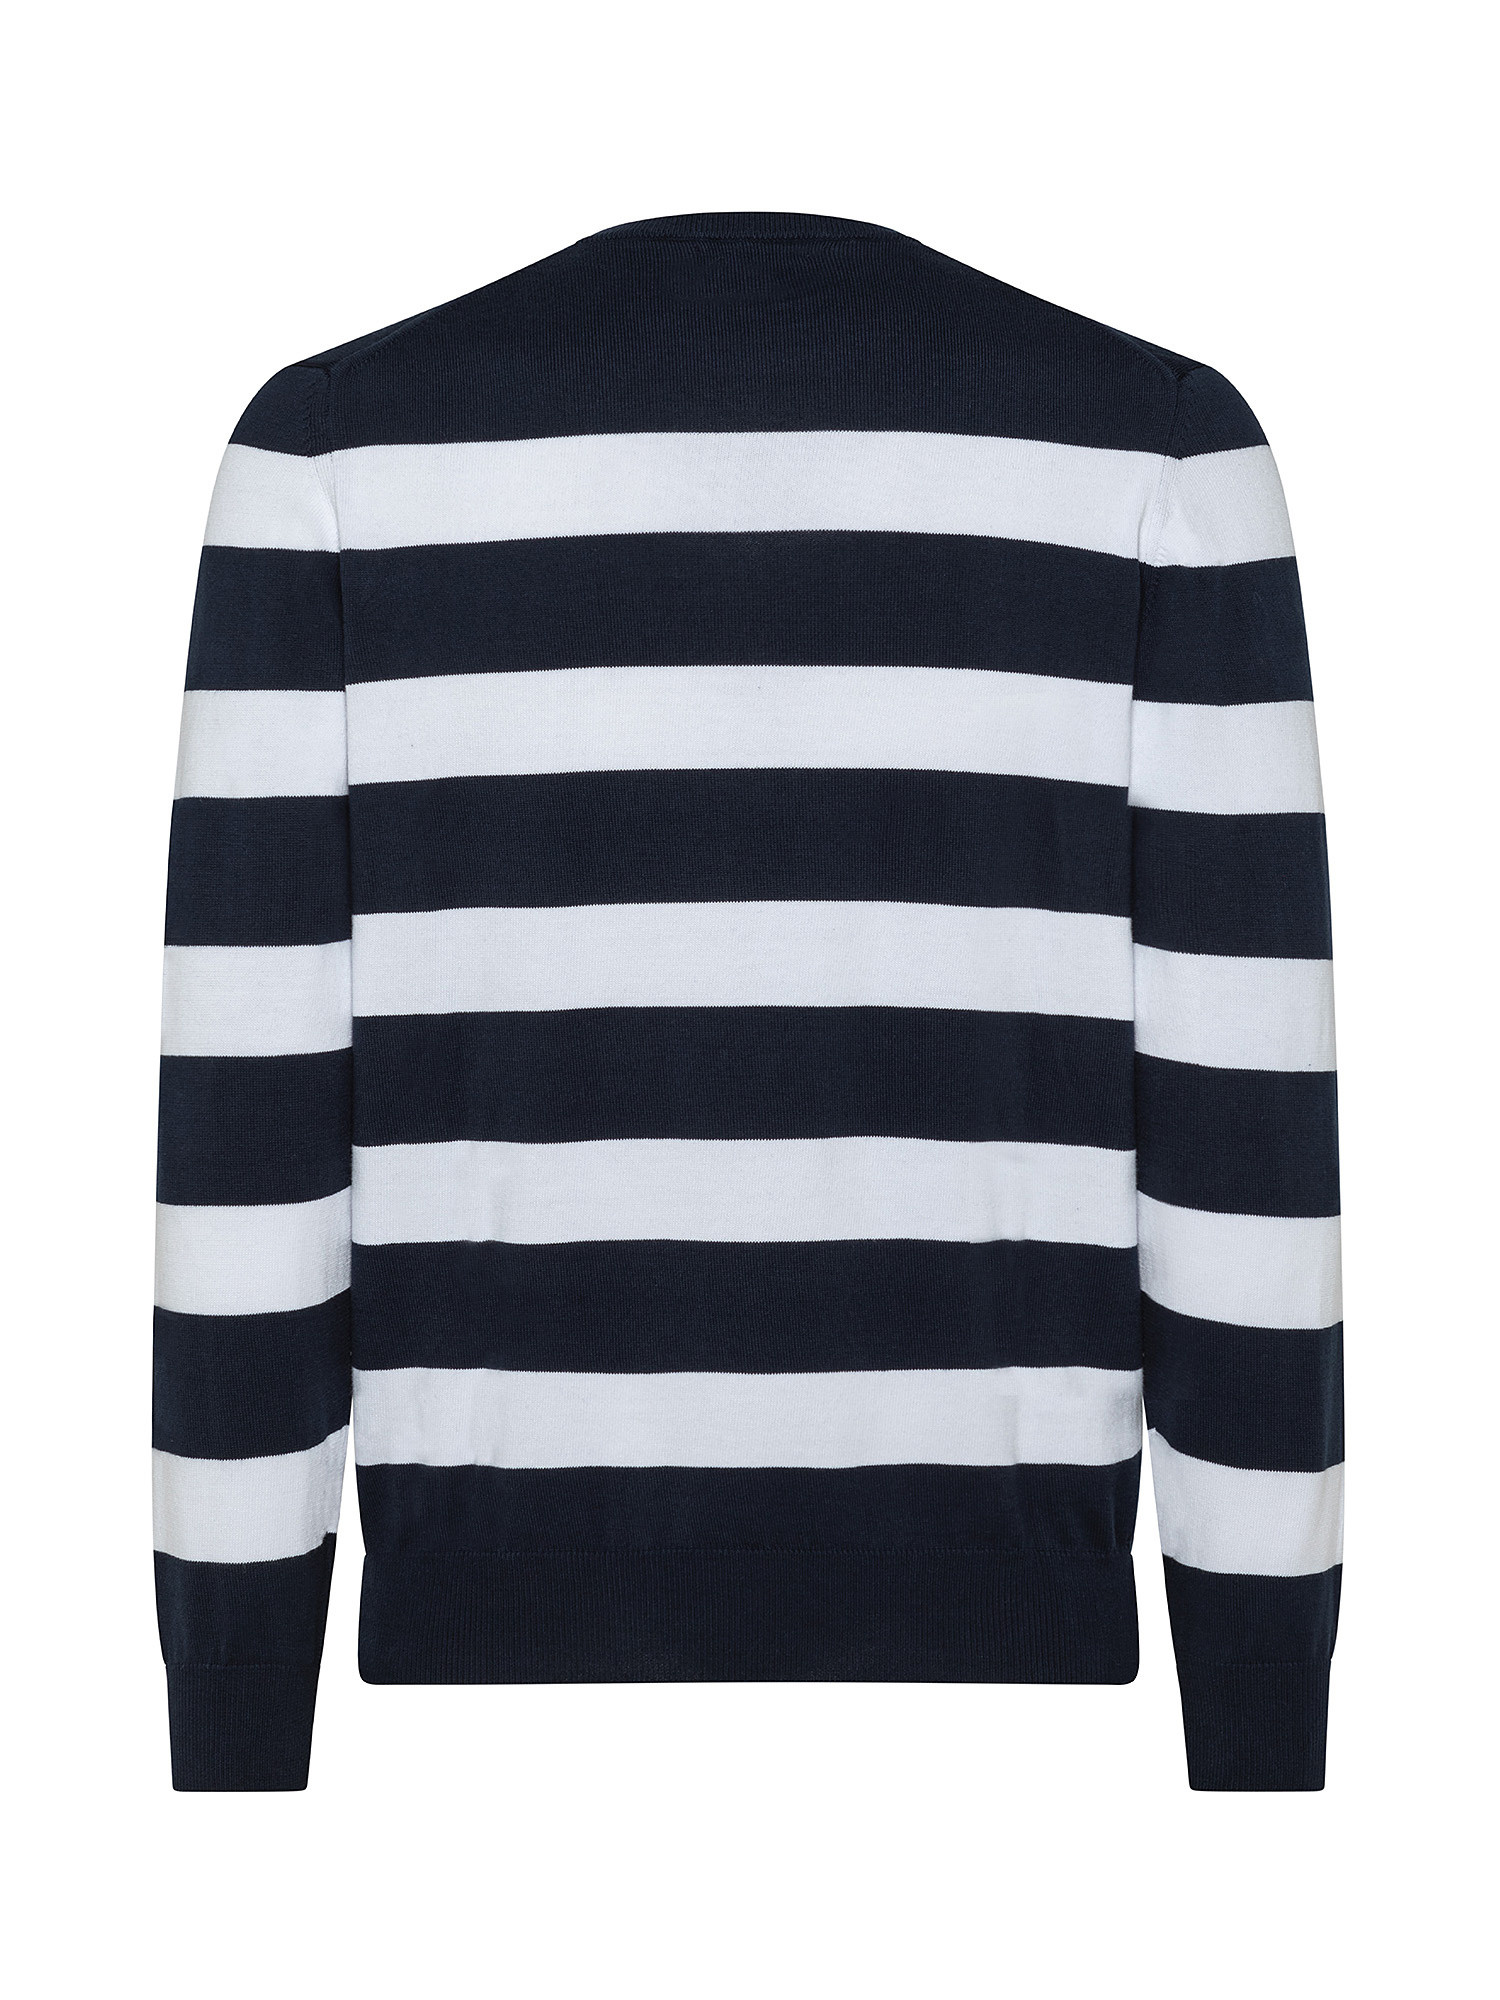 Striped cotton crewneck sweater, Multicolor, large image number 1